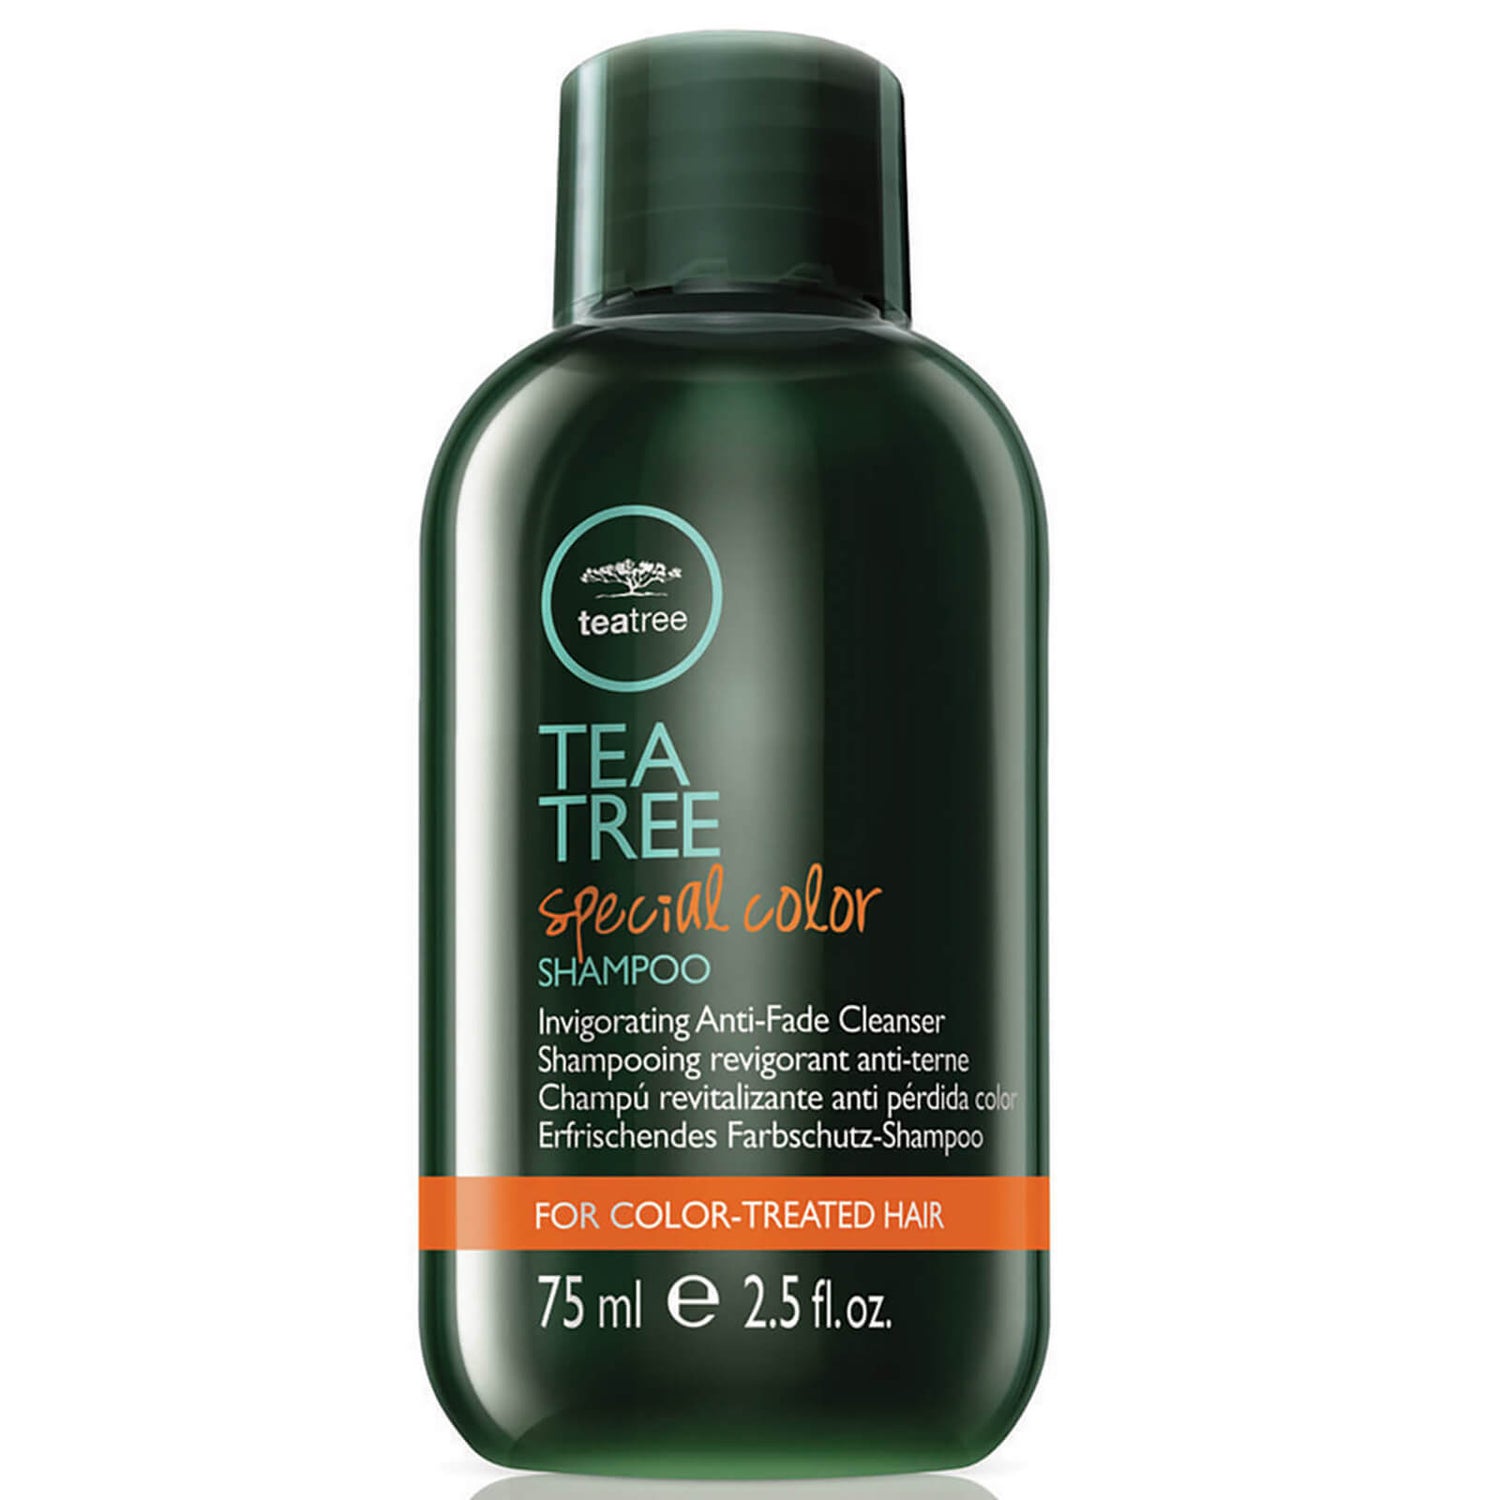 Paul Mitchell Tea Tree Special Color Shampoo 75ml